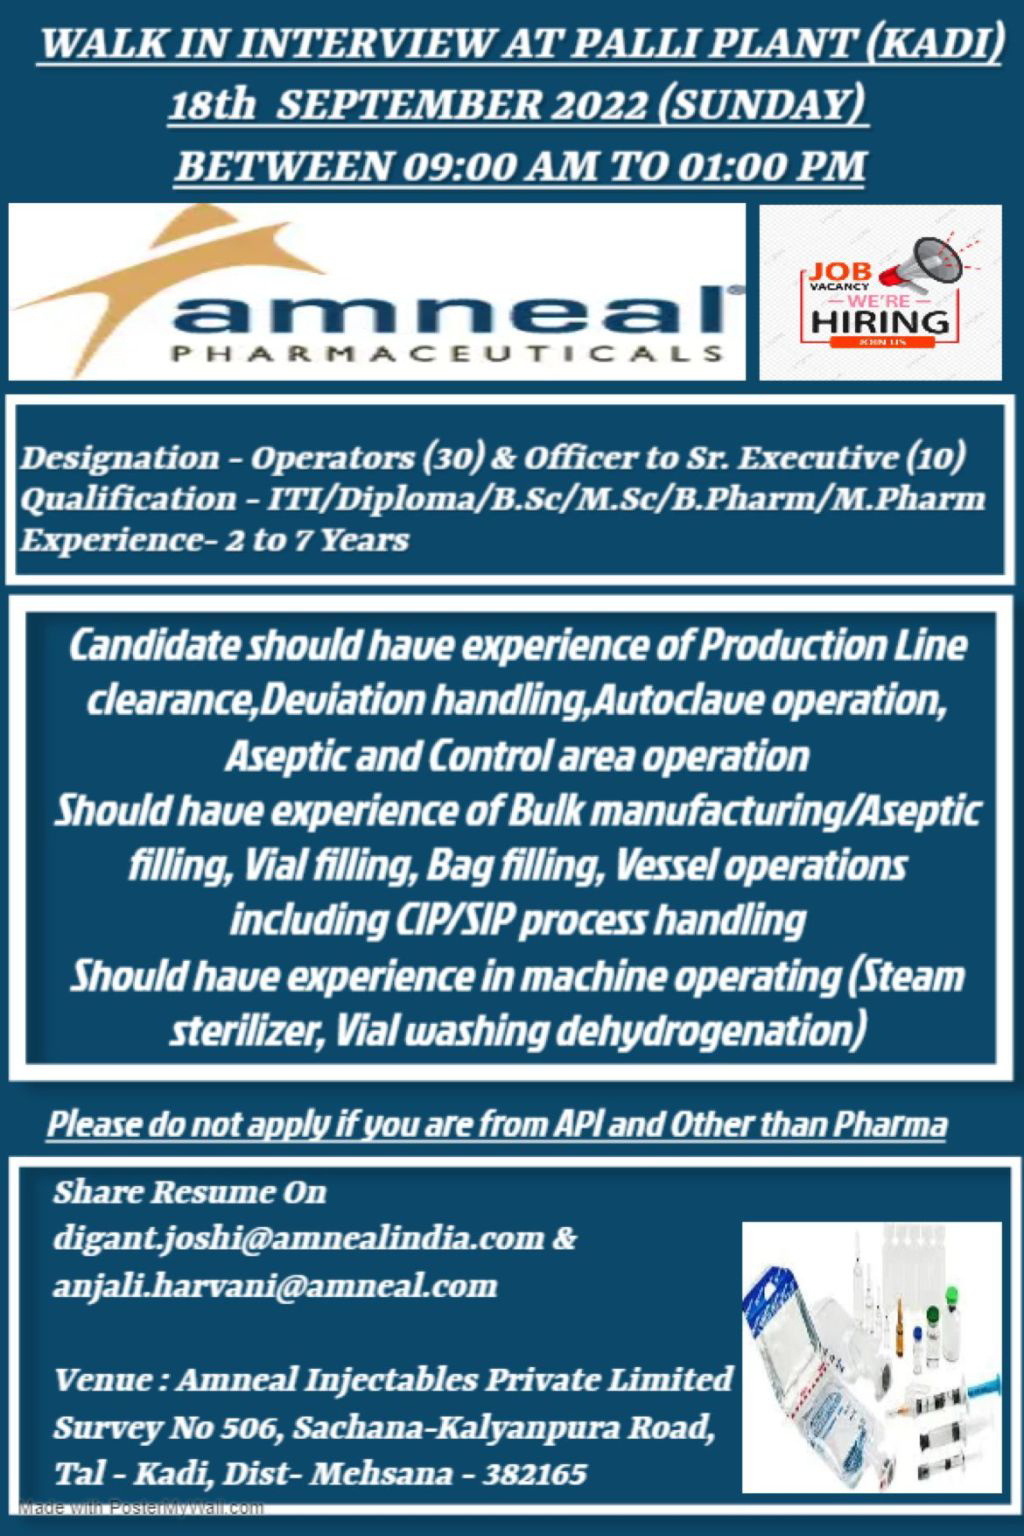 Job Available's for Amneal Pharmaceuticals Pvt Ltd Walk-In Interview for ITI/ Diploma/ BSc/ MSc/ B Pharm/ M Pharm